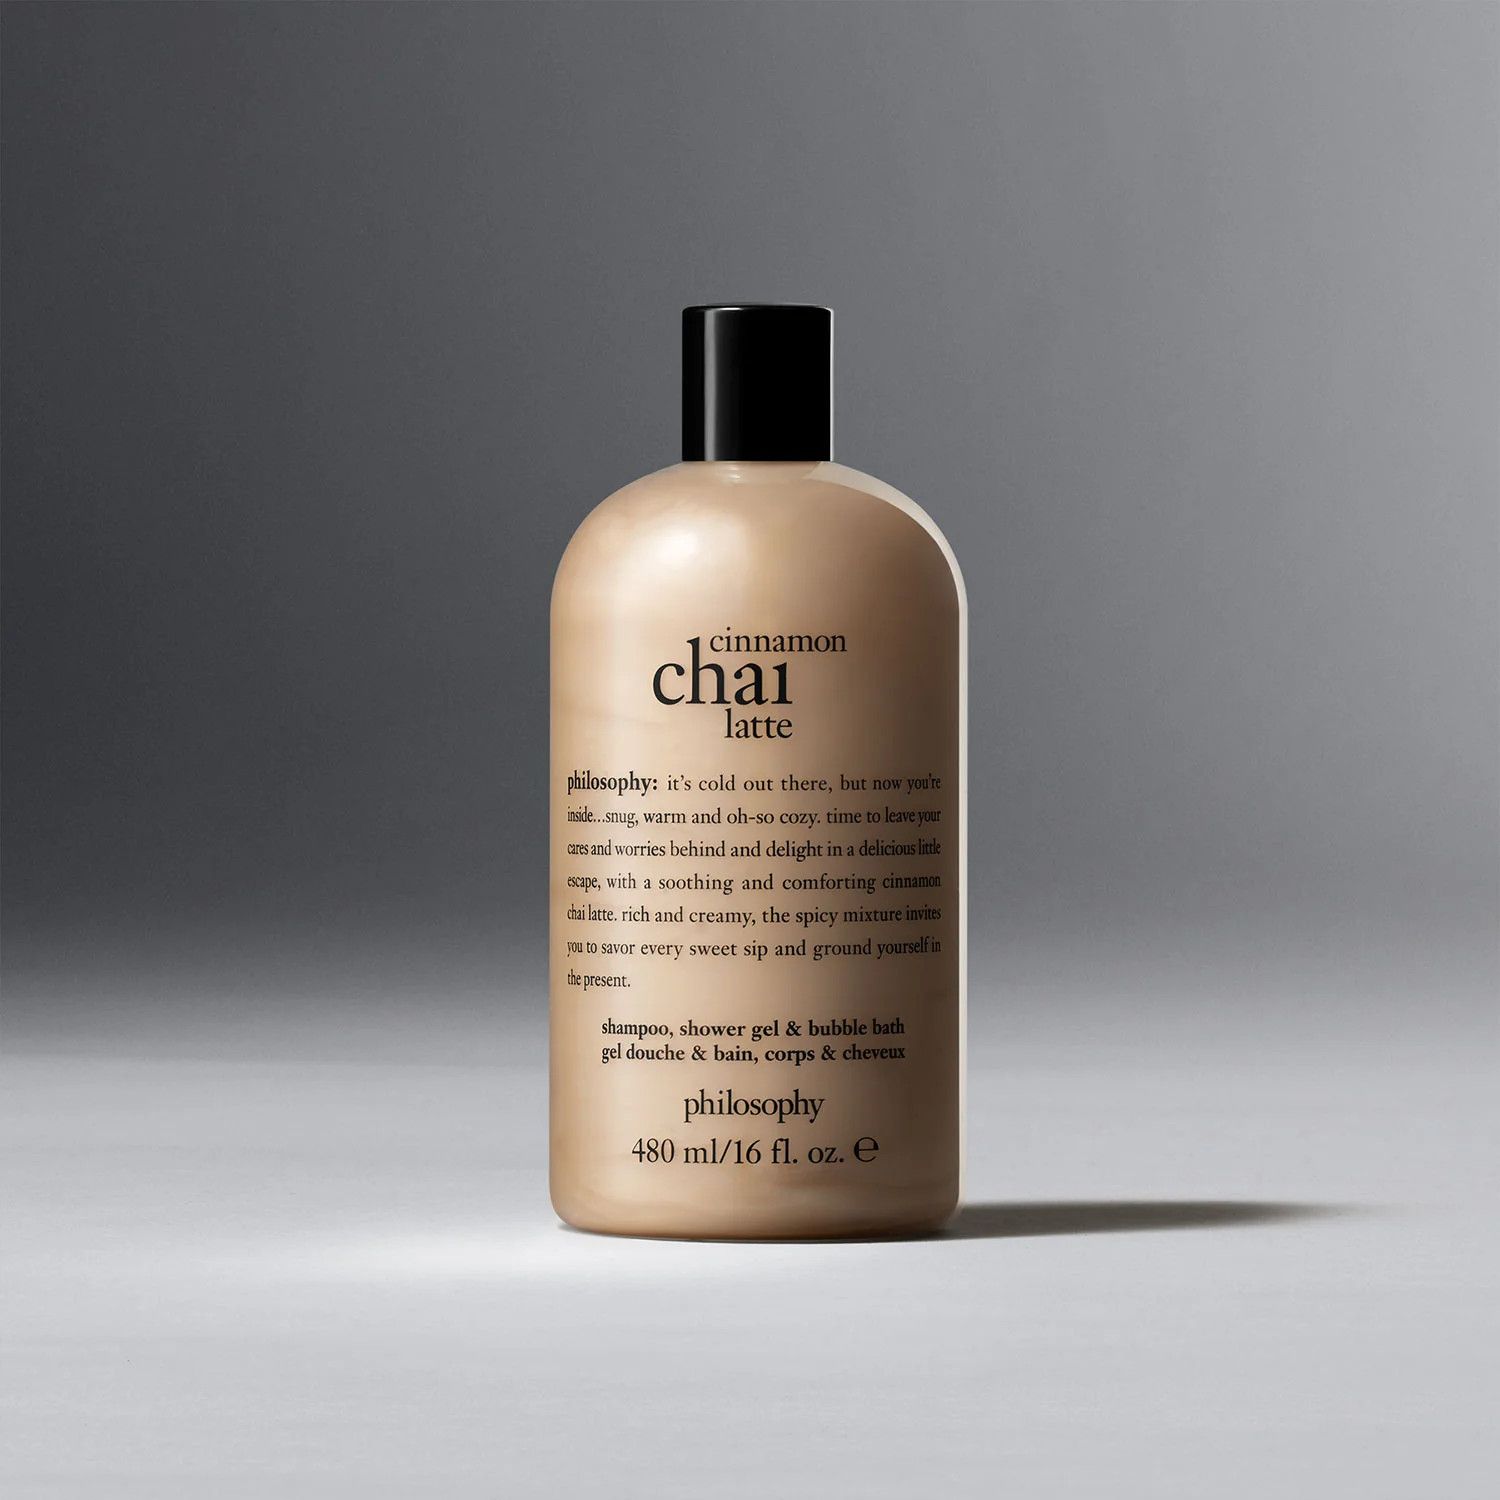 cinnamon chai latte shampoo, shower gel & bubble bath | Philosophy